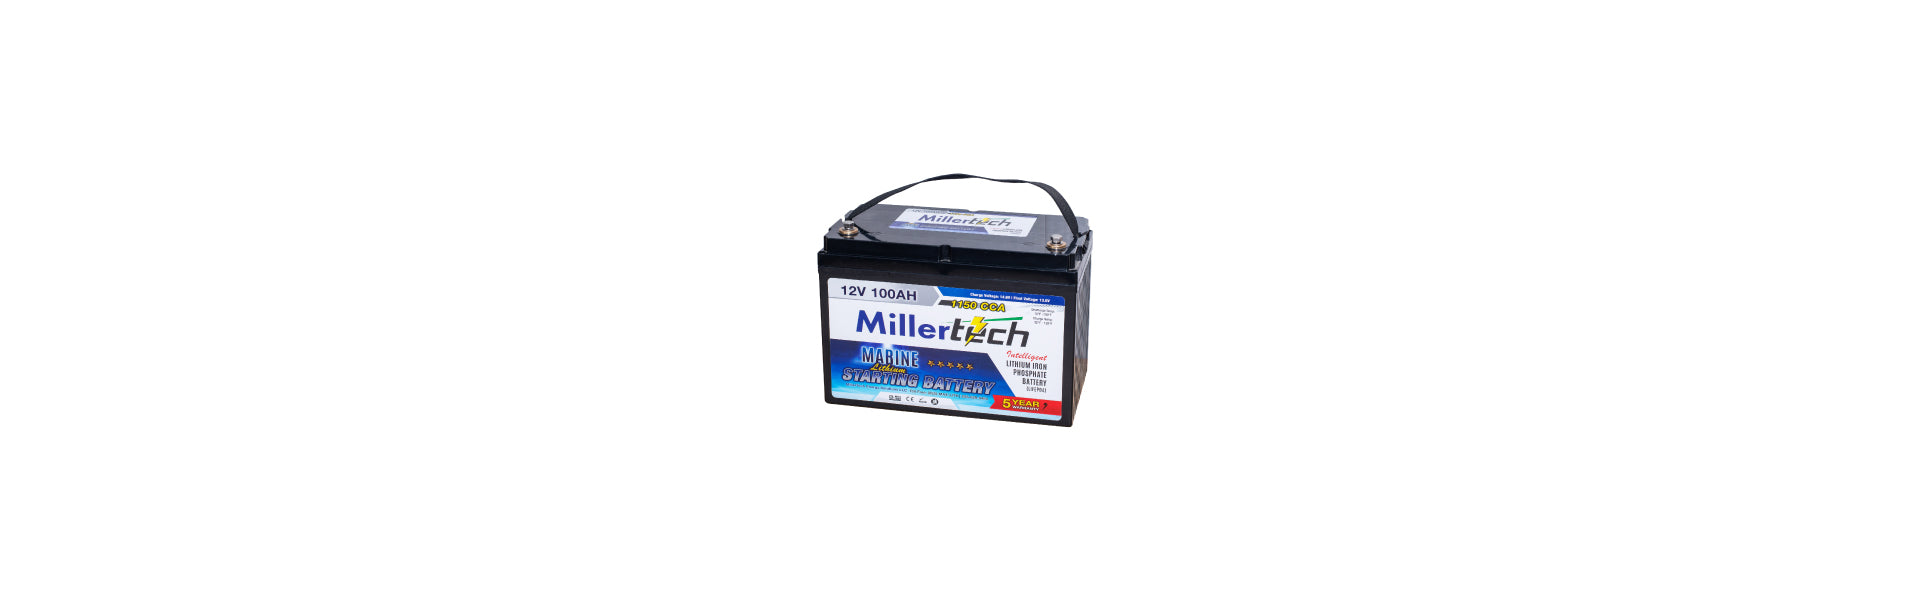 MillerTech 55Ah 12V MARINE Bluetooth Lithium Iron Phosphate